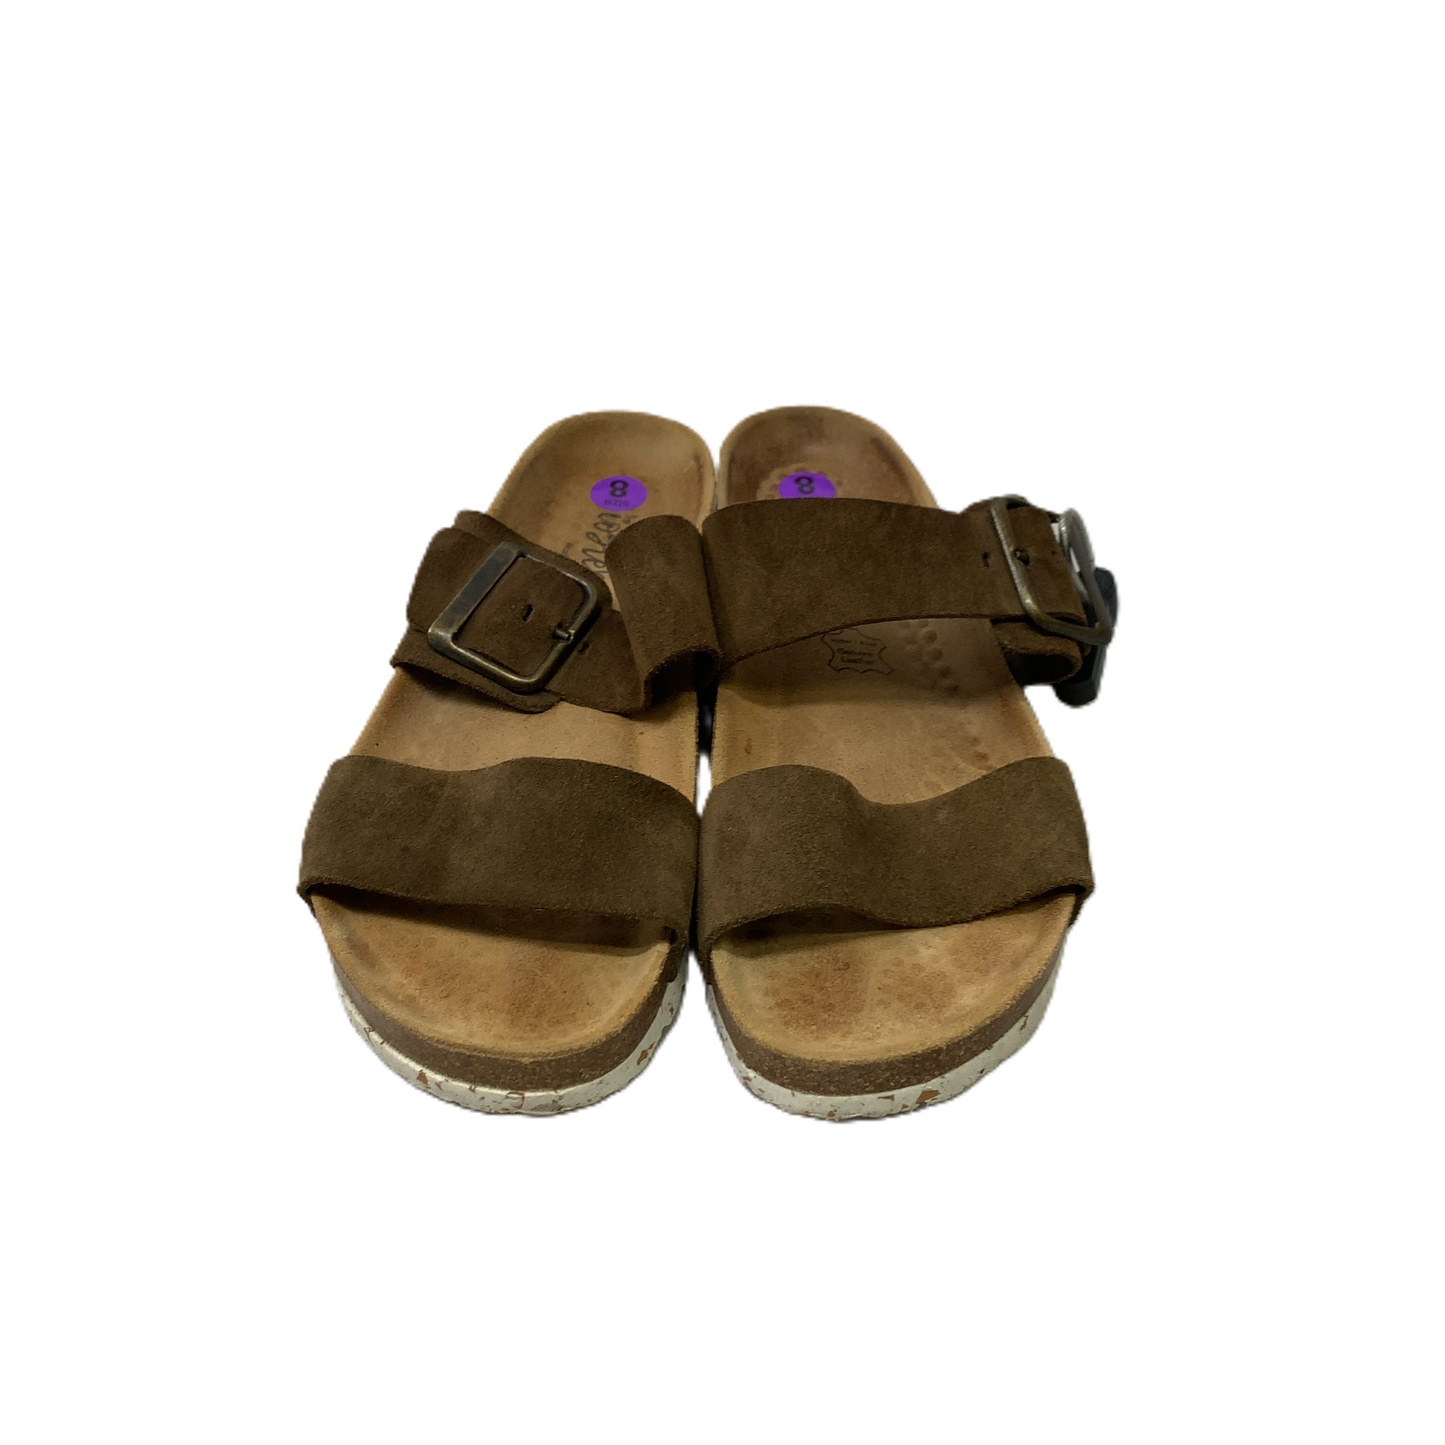 Tan  Sandals Flats By Bio Step  Size: 8